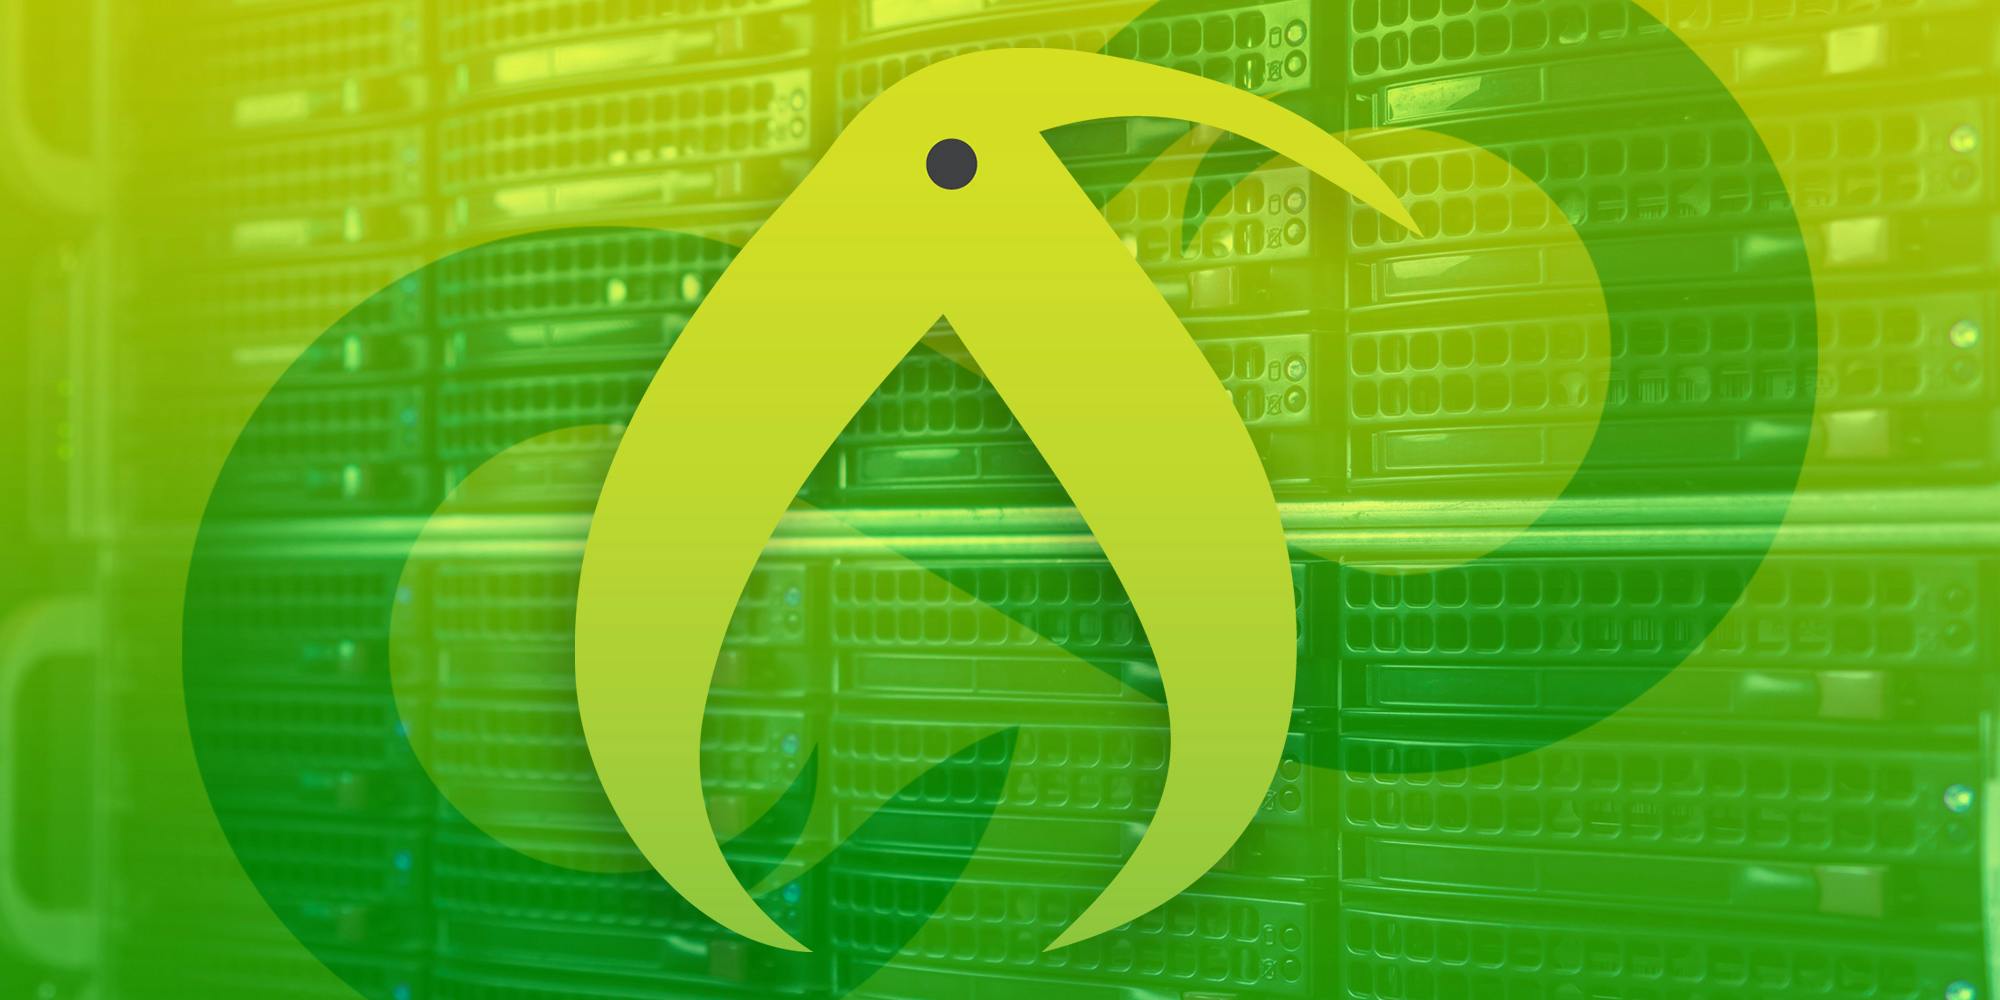 Kiwi Farms logo over data server background with 8chan logo overlay